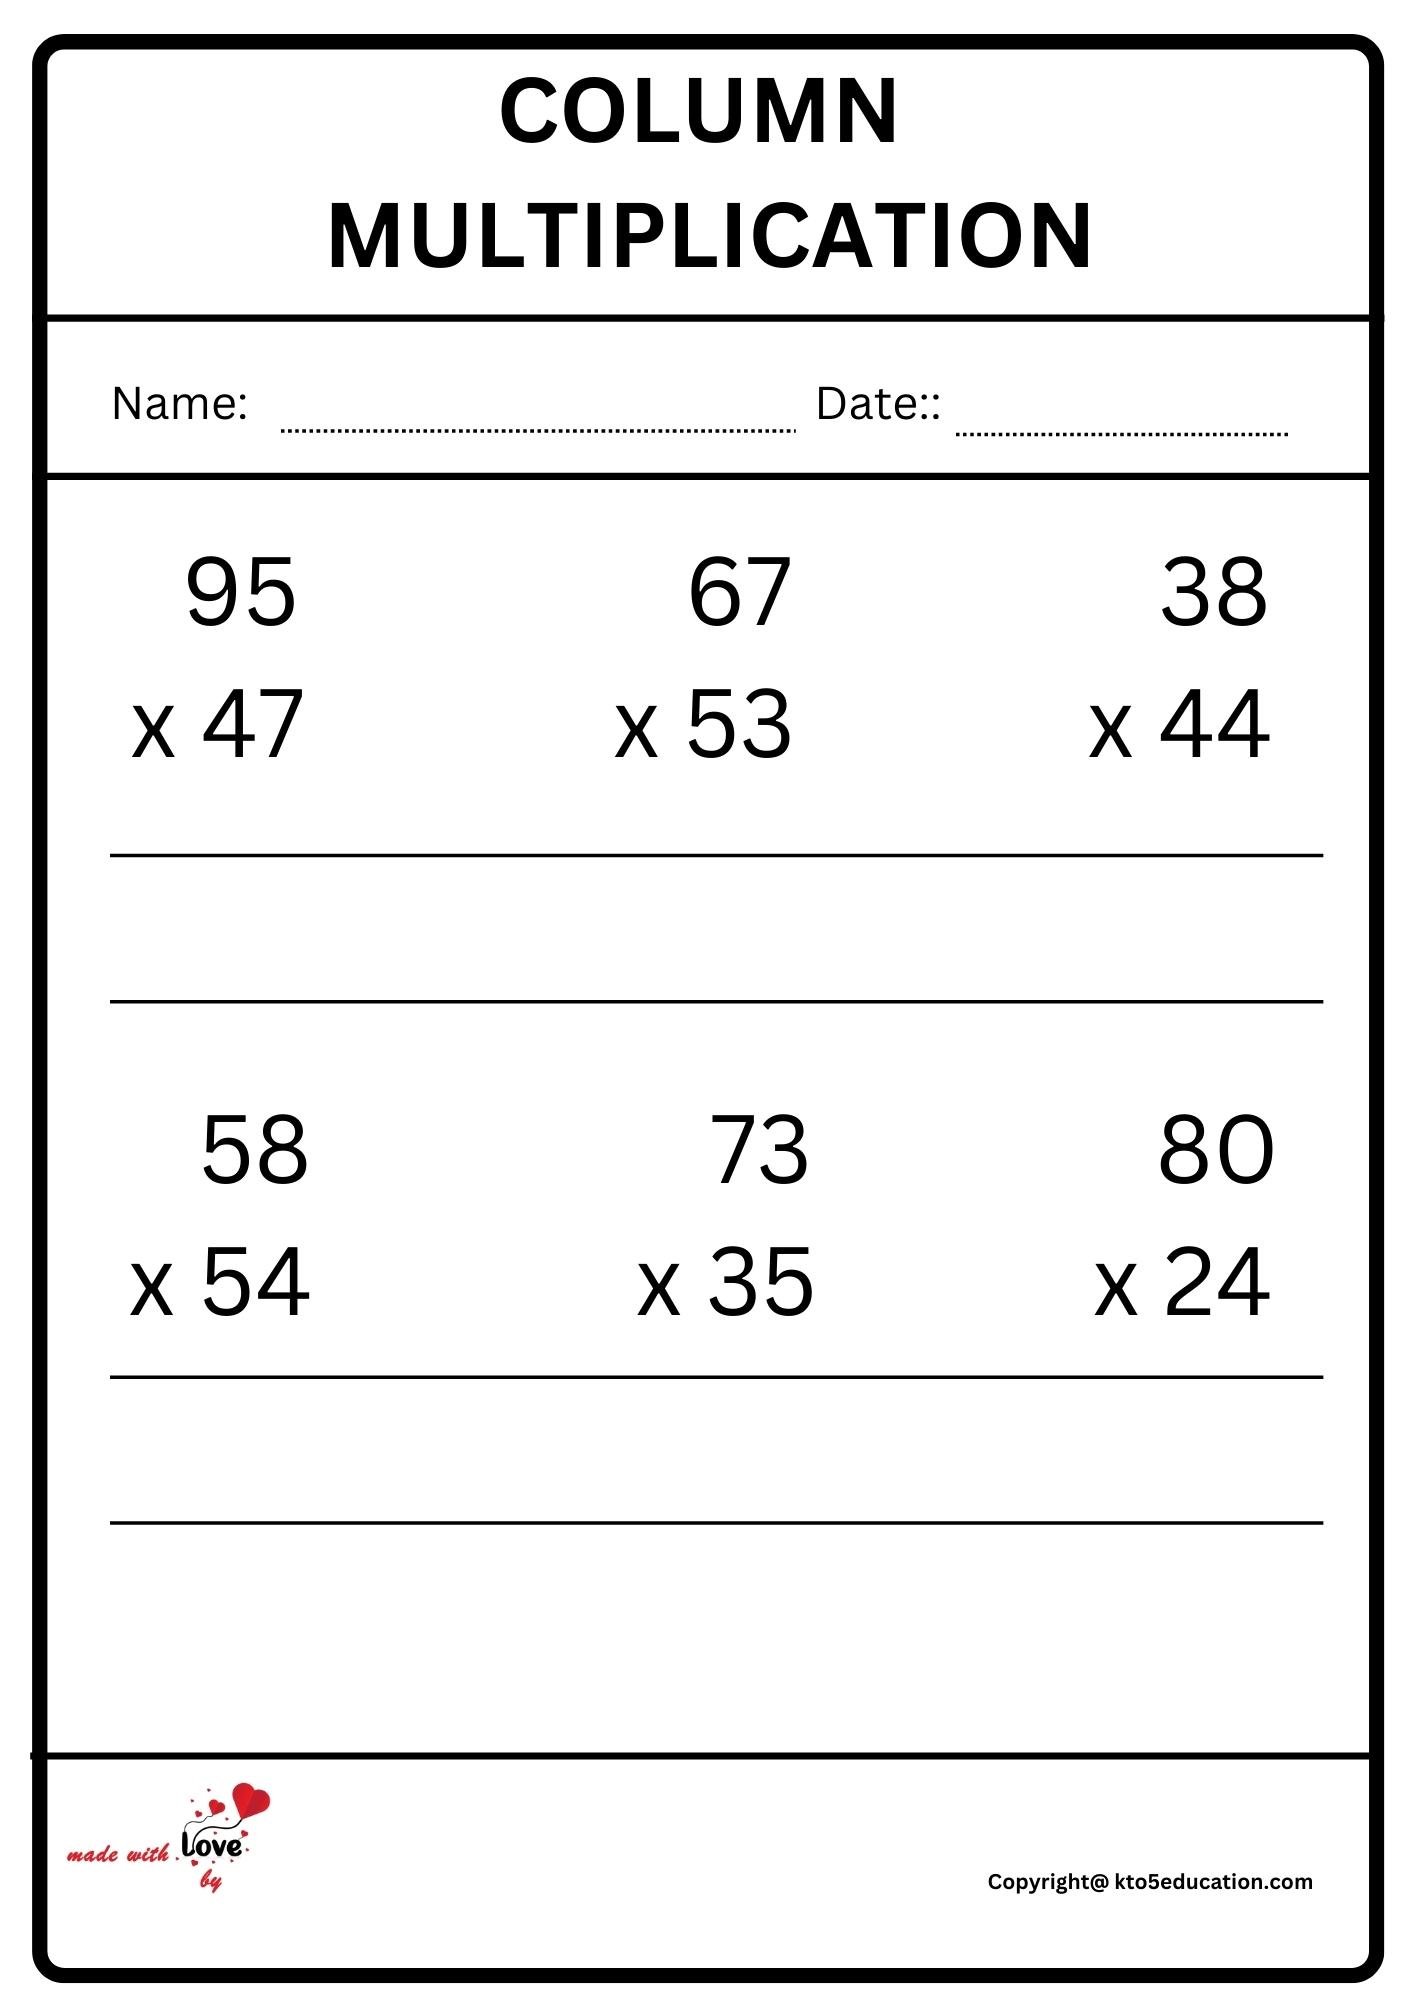 column-multiplication-worksheet-free-download